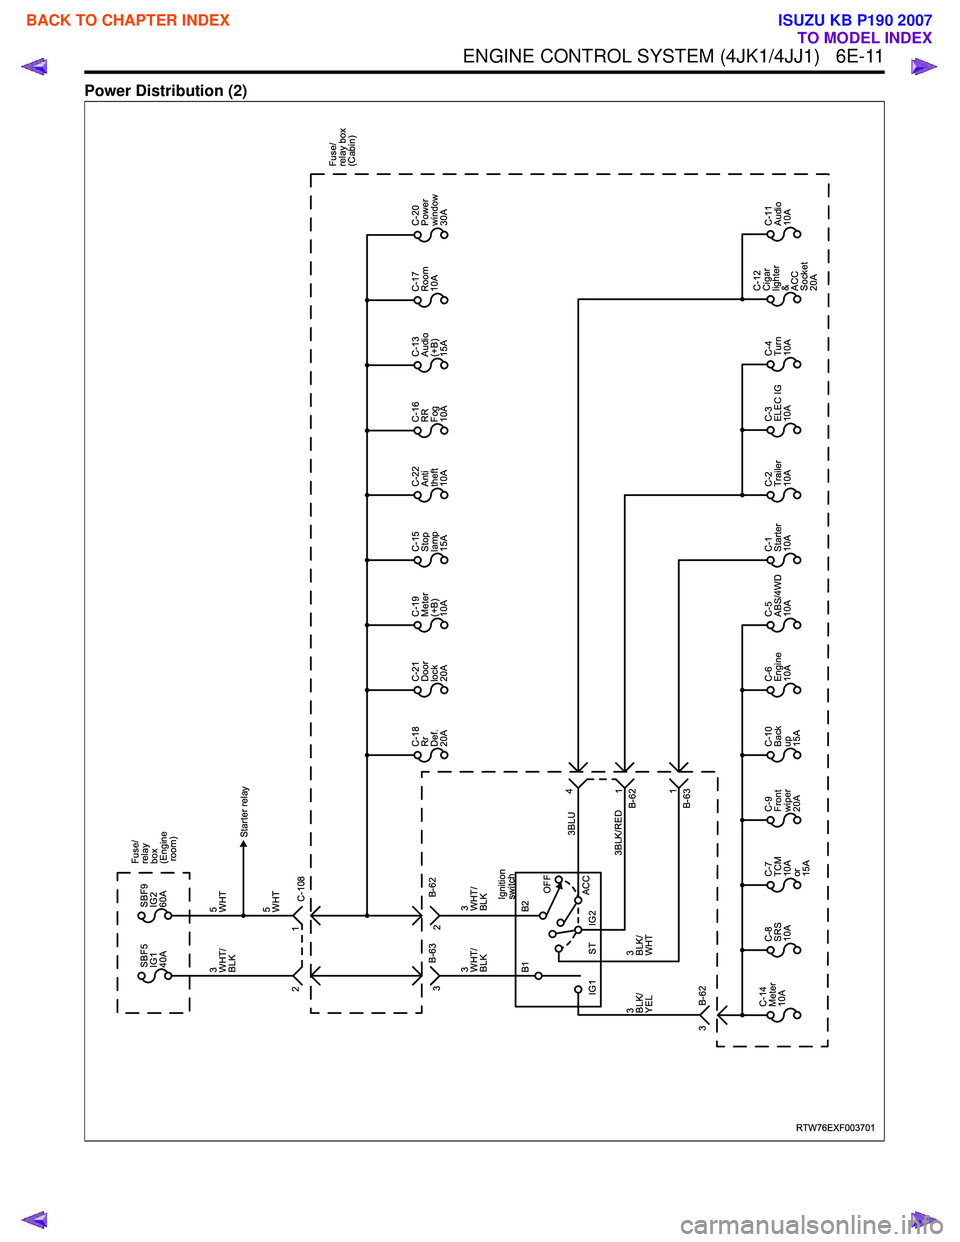 ISUZU KB P190 2007  Workshop Repair Manual ENGINE CONTROL SYSTEM (4JK1/4JJ1)   6E-11
Power Distribution (2)
RTW76EXF003701
C-108
5 
WHT
3
WHT/
BLK
5
WHT
3
WHT/
BLK
3BLU
3BLK/RED
3
WHT/
BLK
3
BLK/
YEL 3
BLK/
WHT B-62
B-63
2
4
B-62 
B-63 